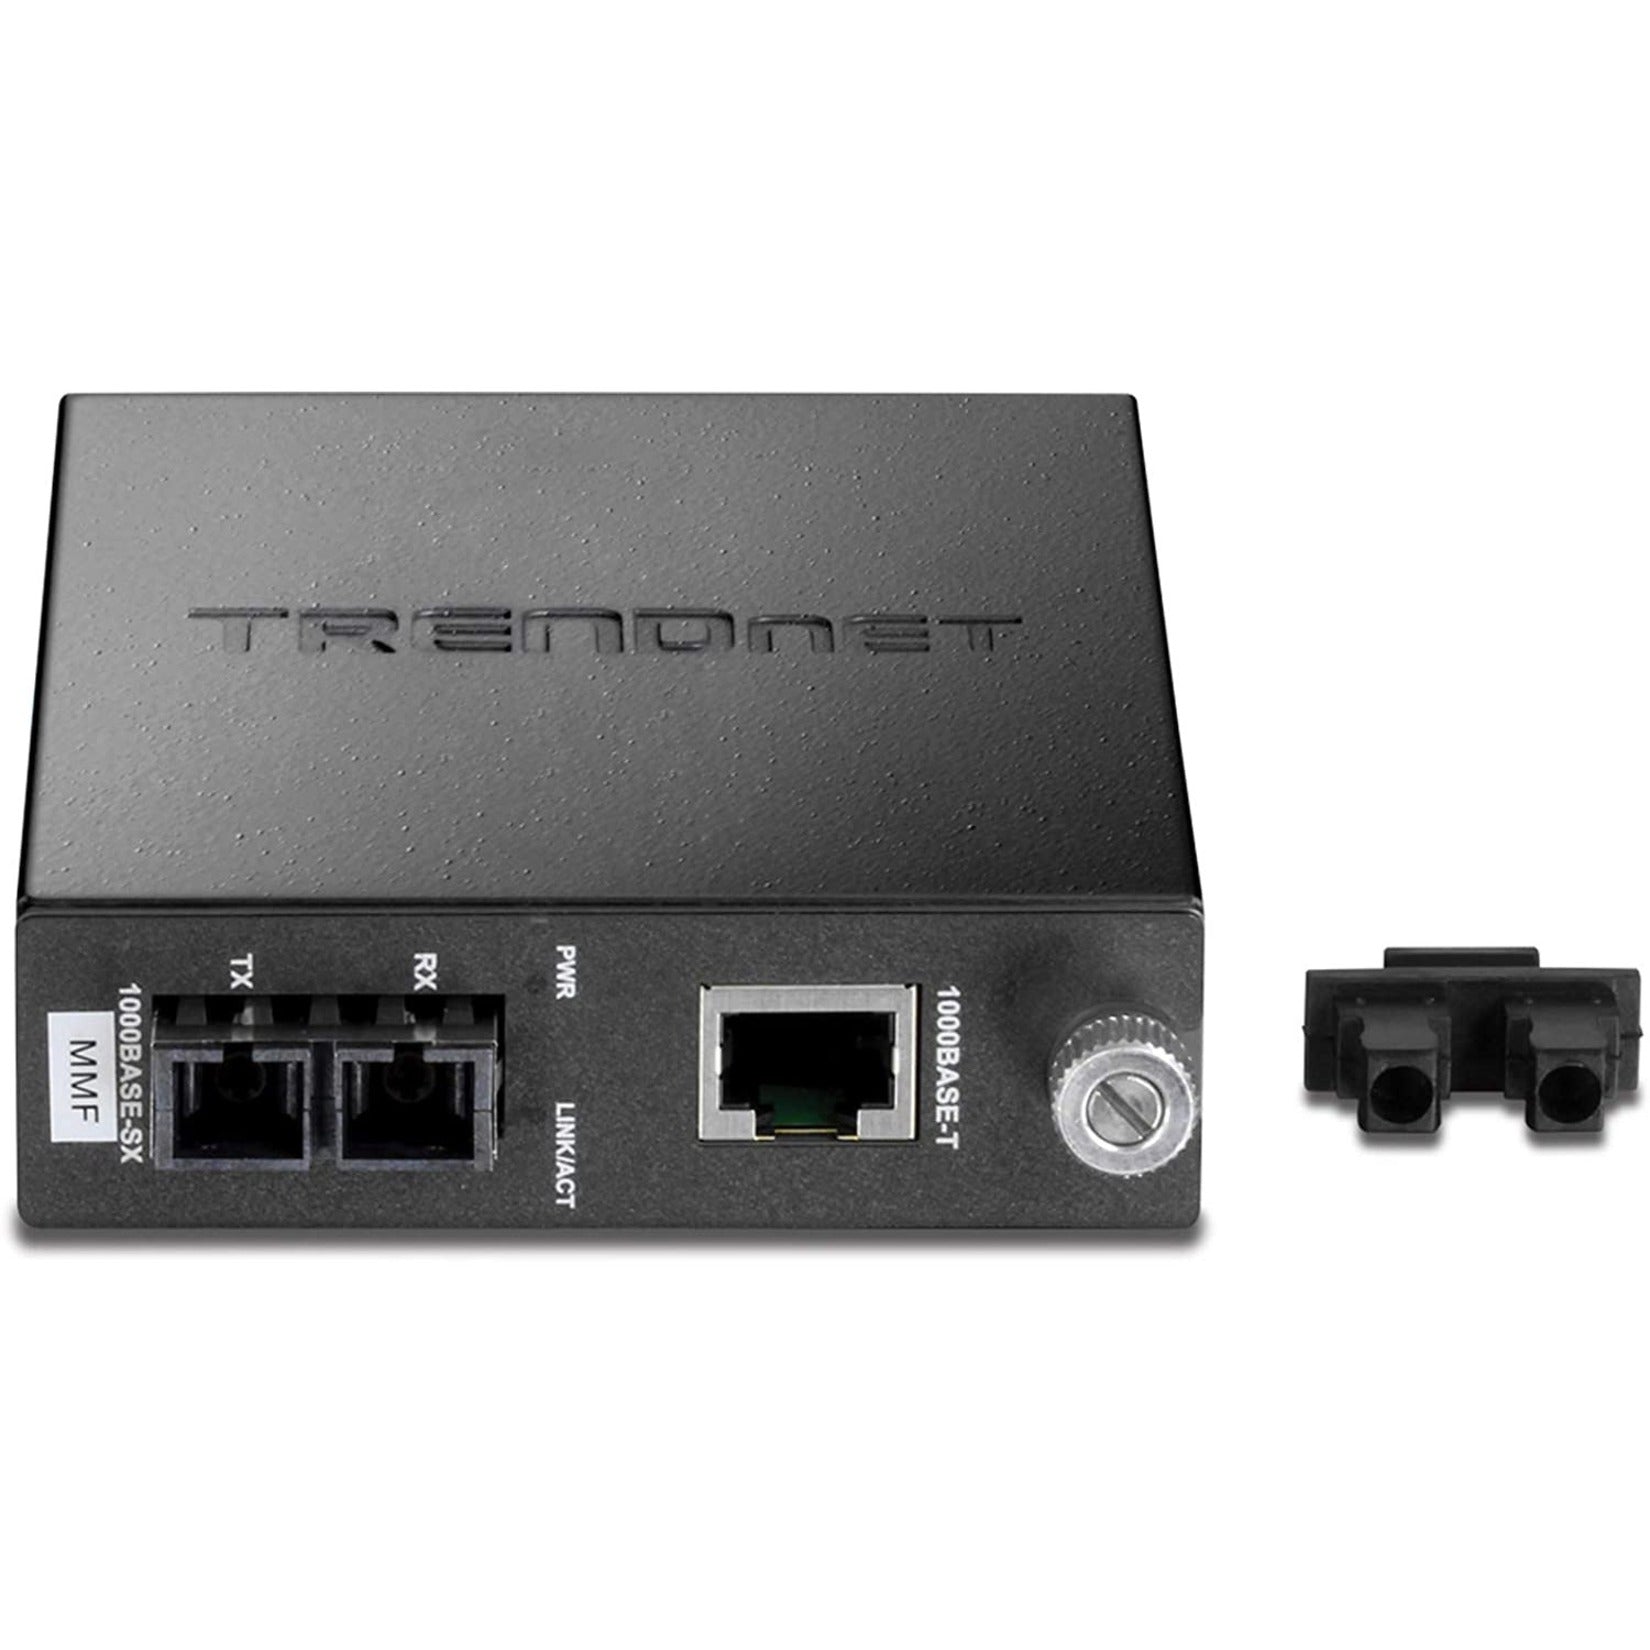 TRENDnet TFC-1000MSC 1000Base-T to 1000Base-SX SC-type Fiber Converter, Multi-Mode Fiber with SC Connector